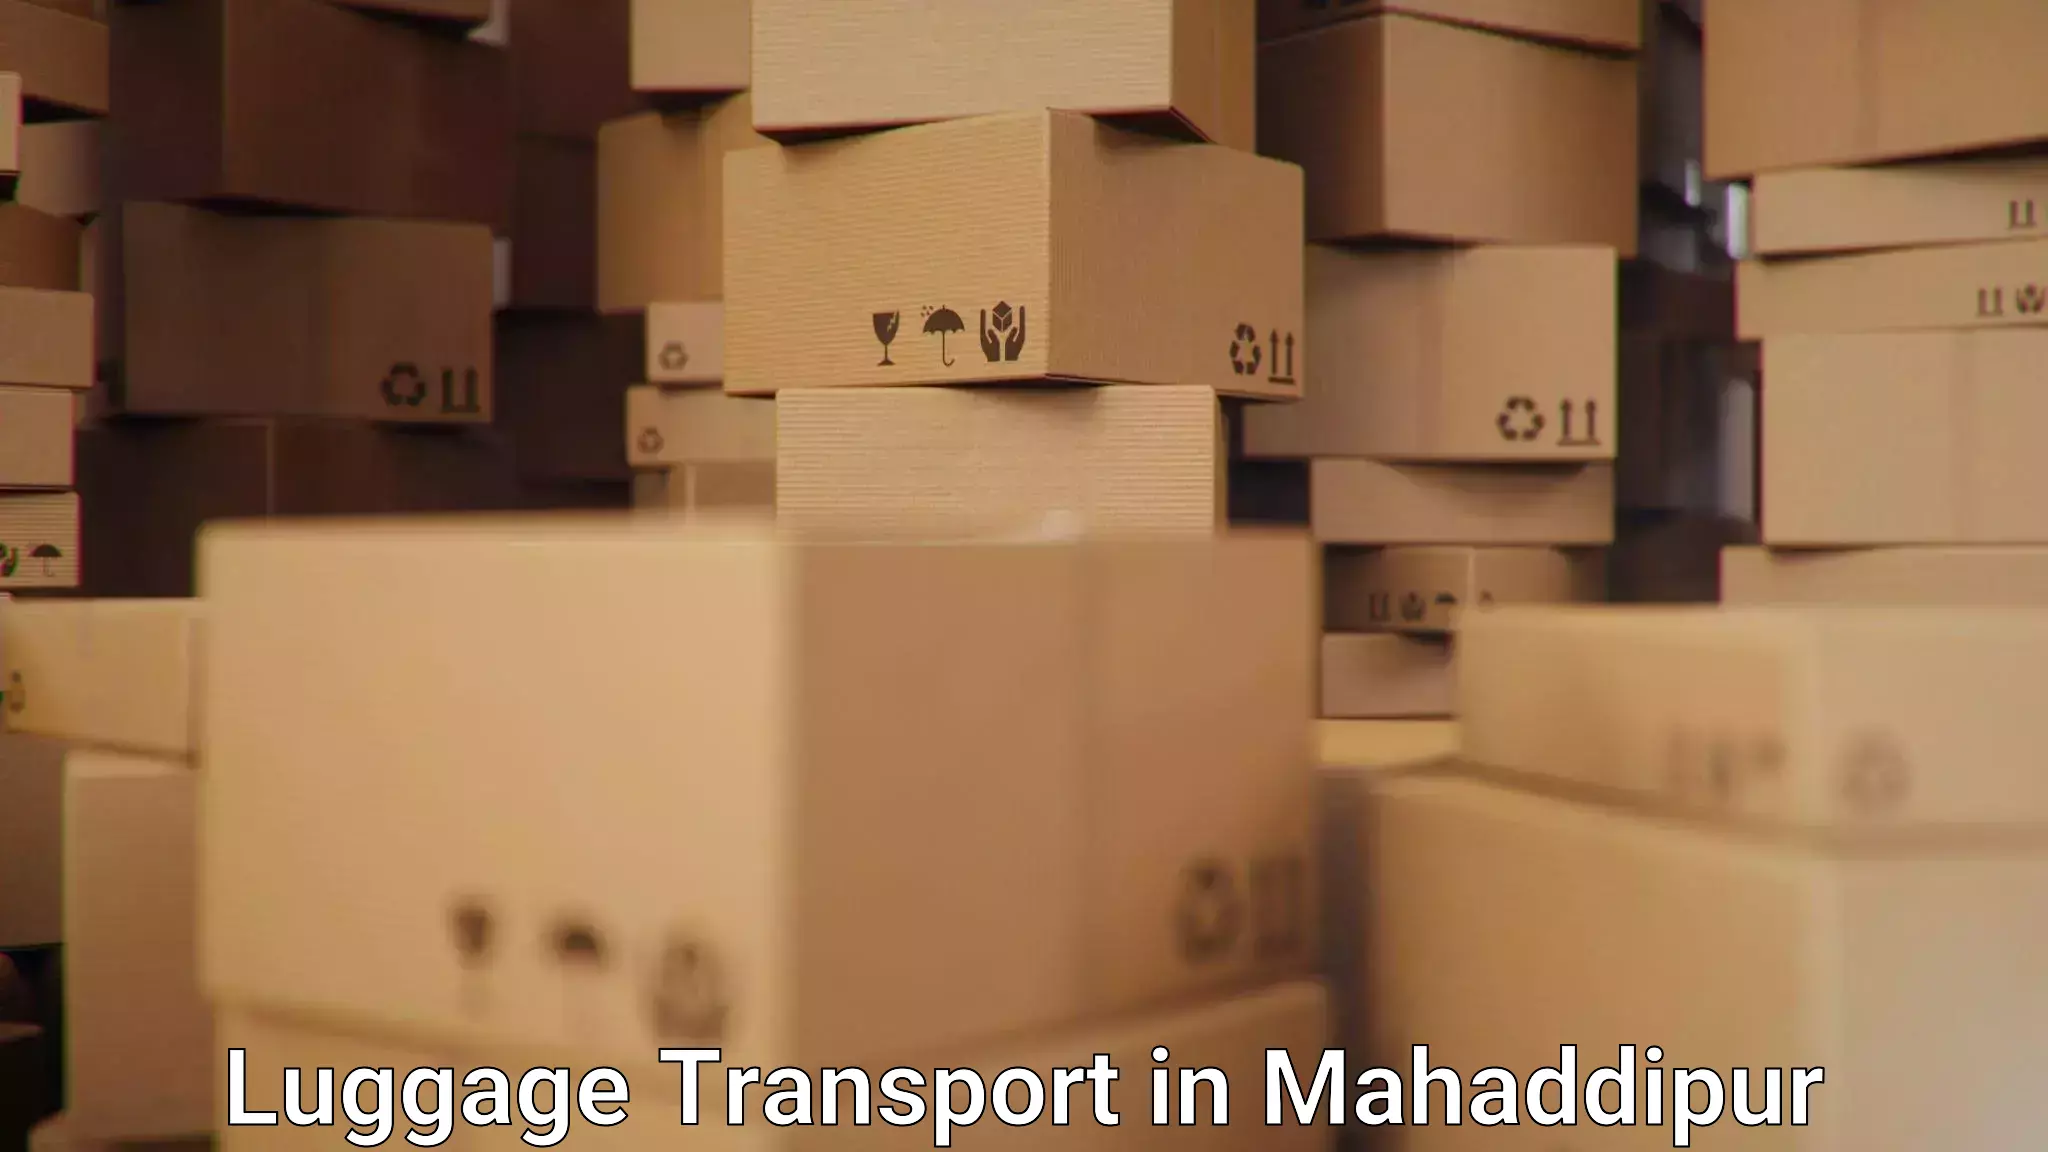 Luggage transport company in Mahaddipur